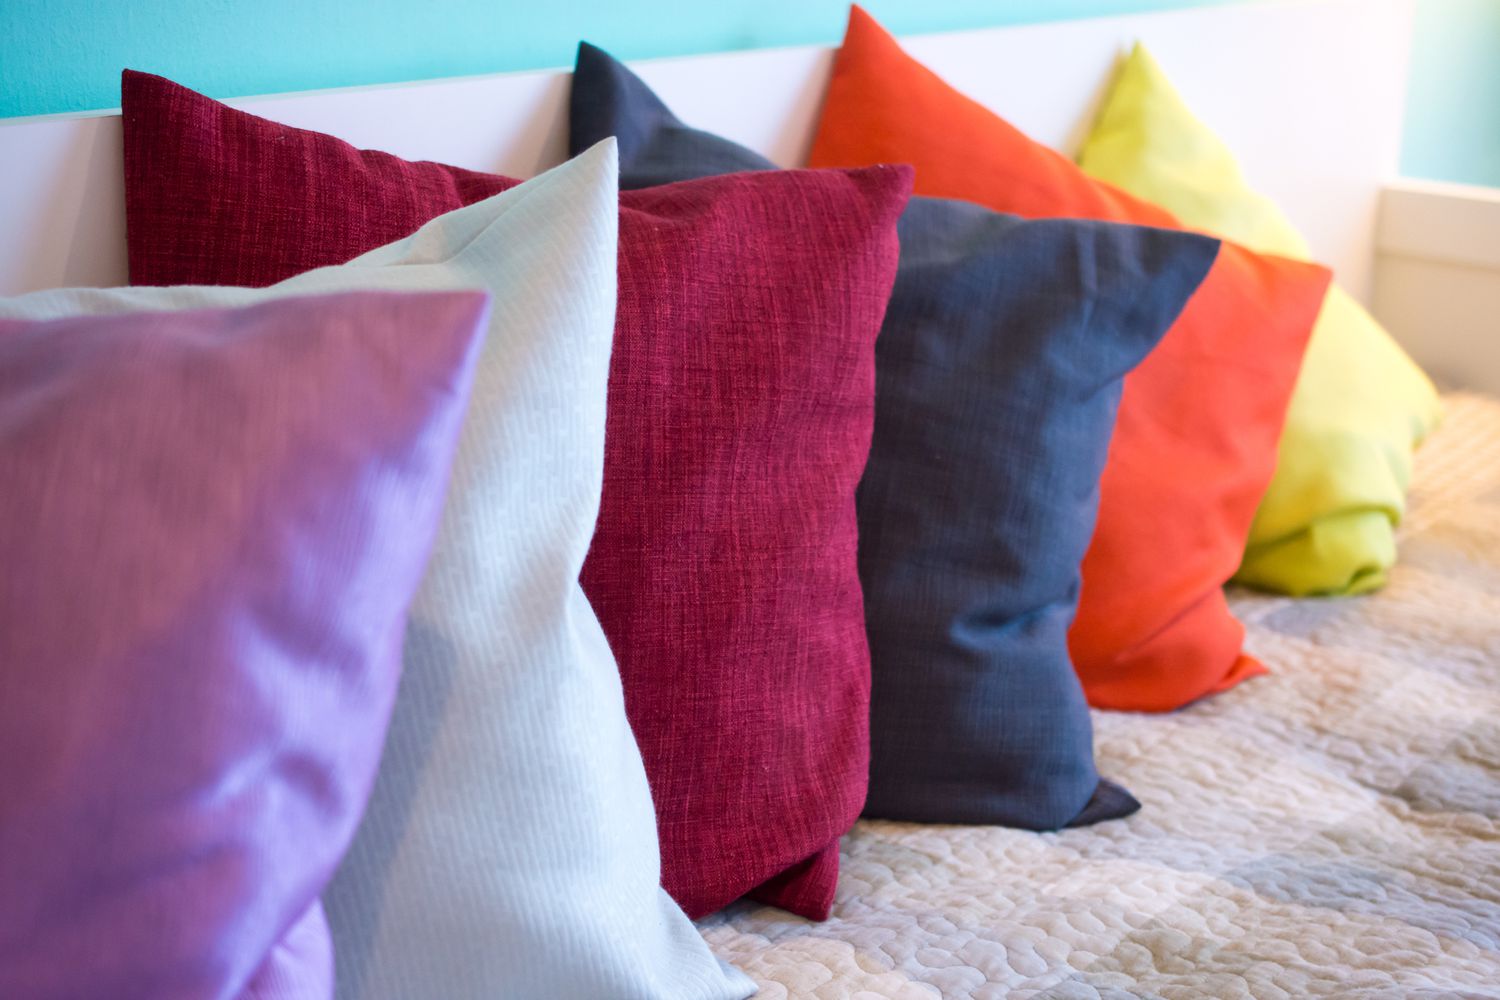 Oreiller décoratif confortable tissu naturel, avec oreillers multicolores